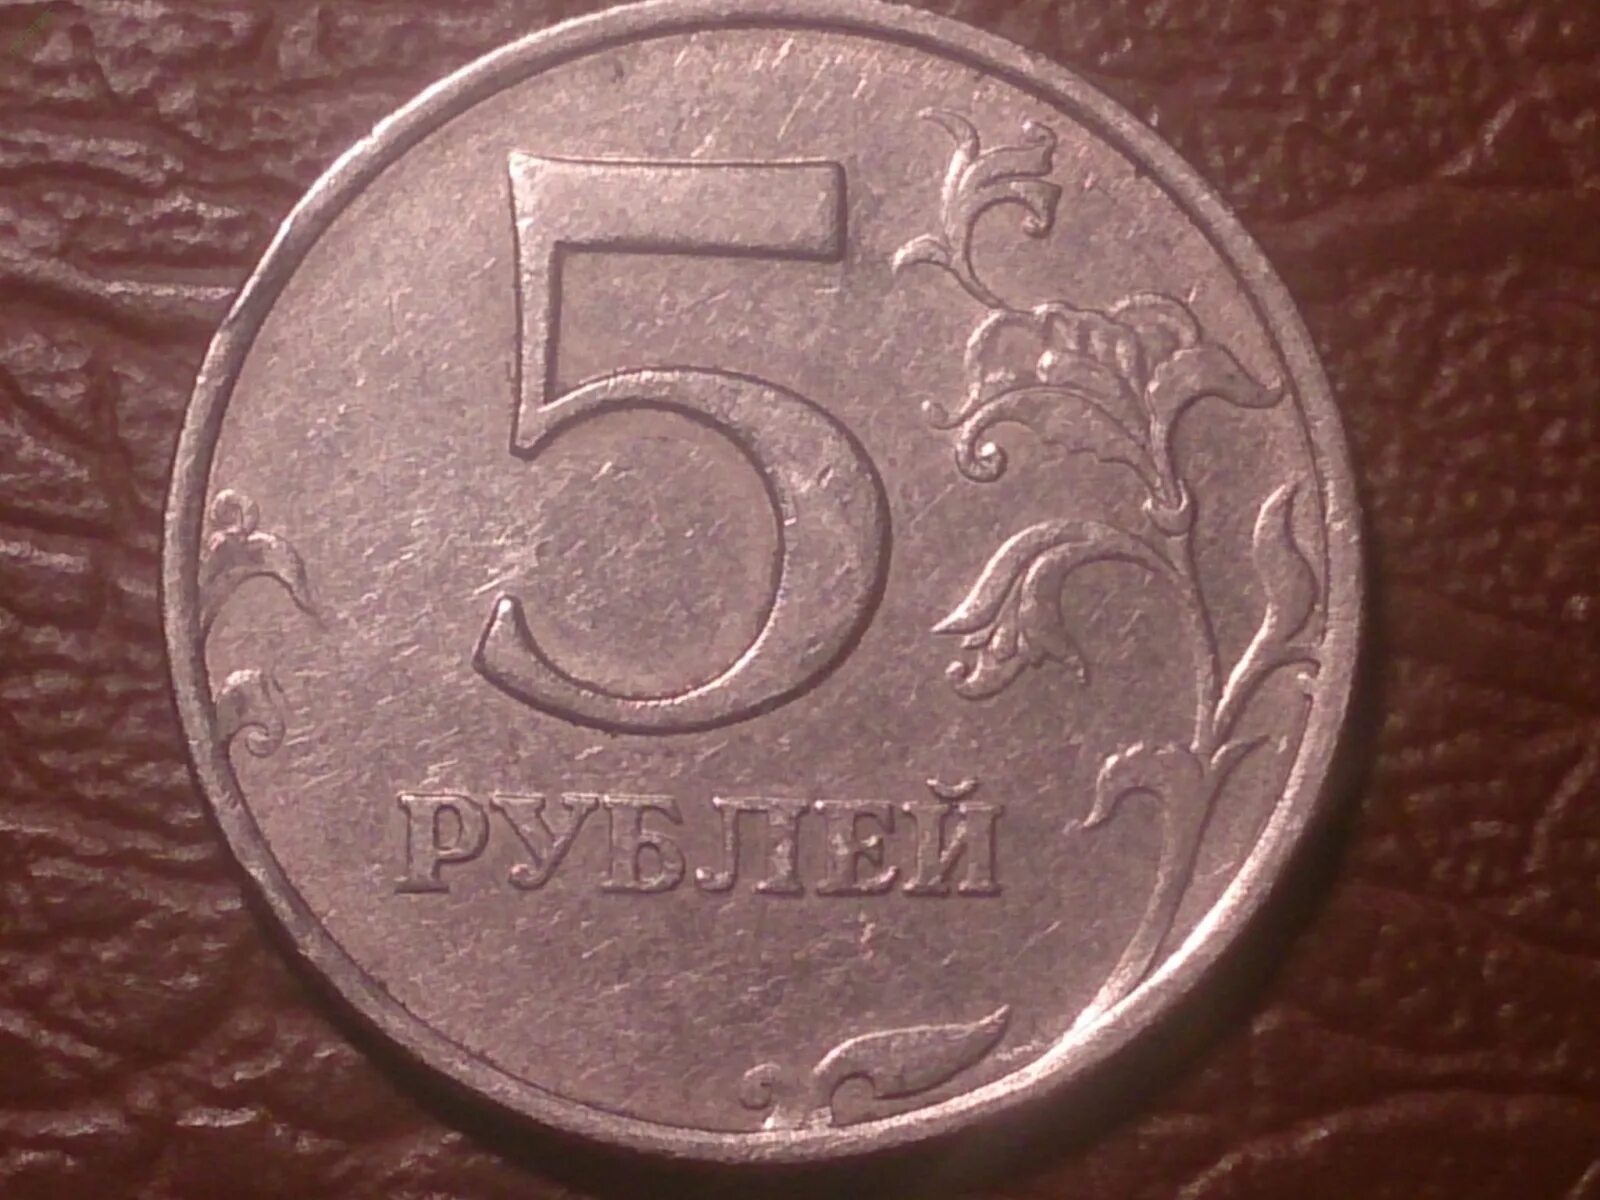 Цена 5 рублей со. 5 Рублей 1997 ММД СПМД. 5 Рублей 1997 ММД. 5 Рублей 1997 год Санкт Петербургский монетный двор. 5 Рублей 1997 СПМД.